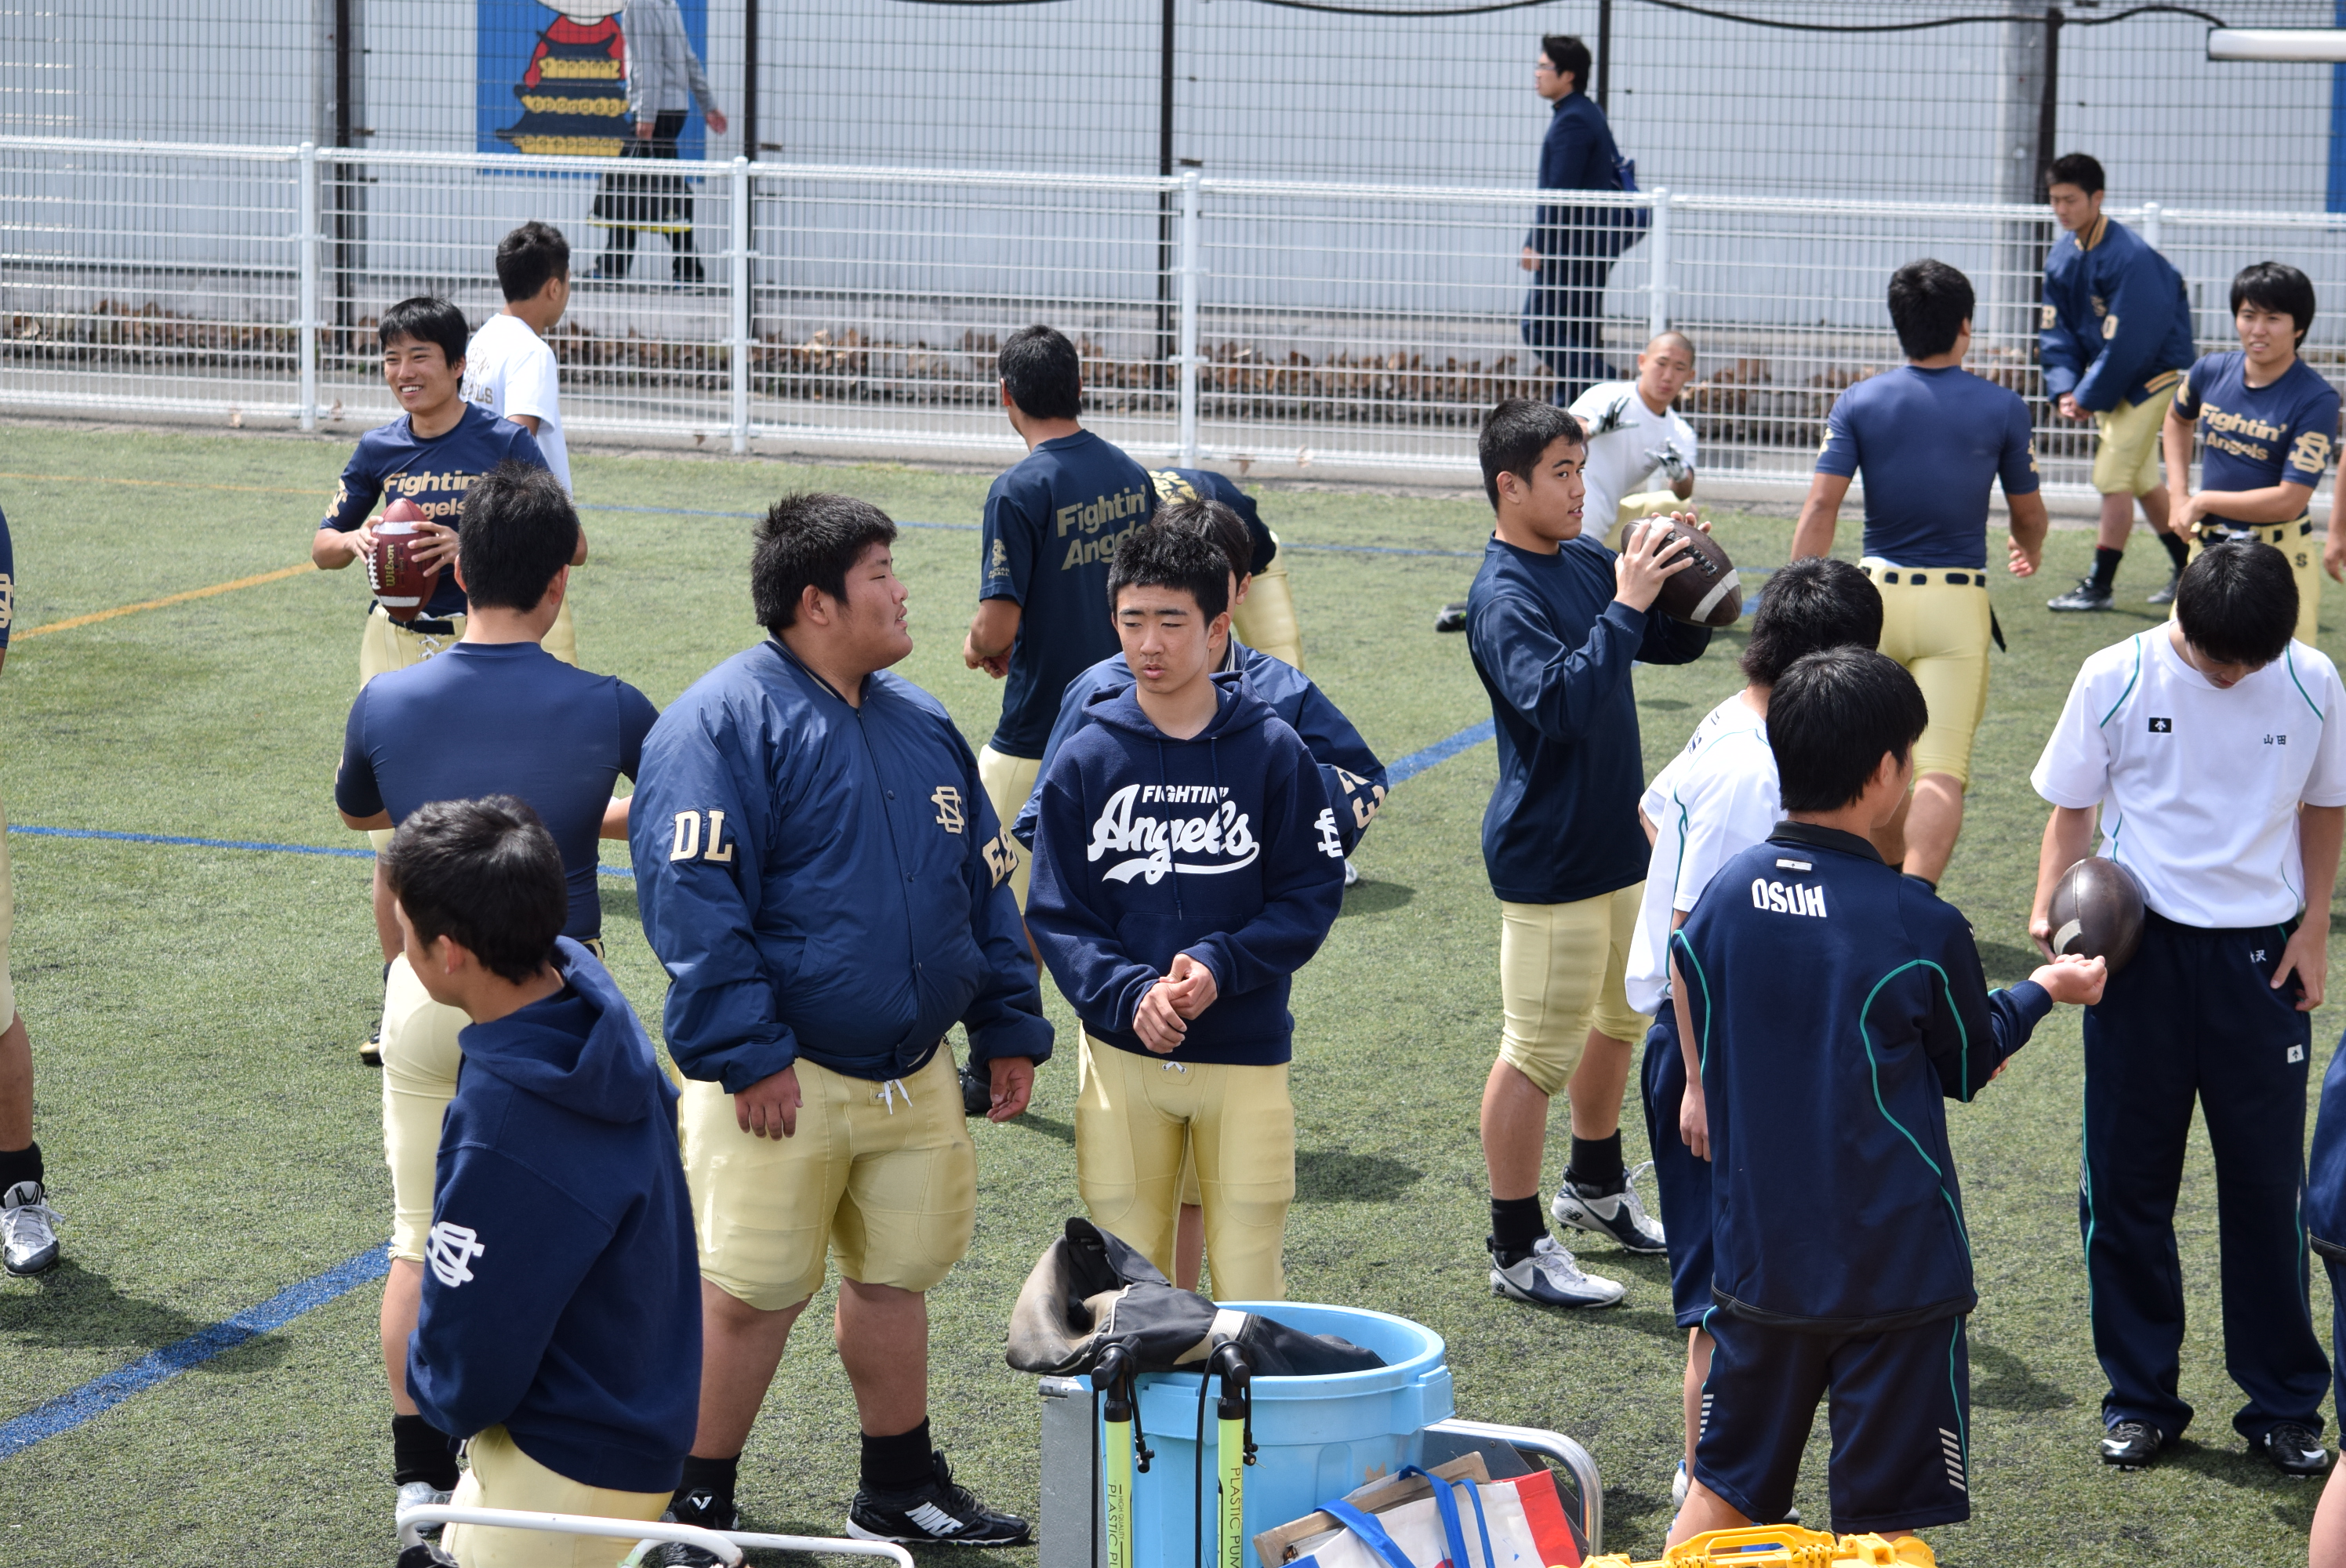 DSC_0266 - 大阪産業大学附属高等学校 アメリカンフットボール部応援サイト